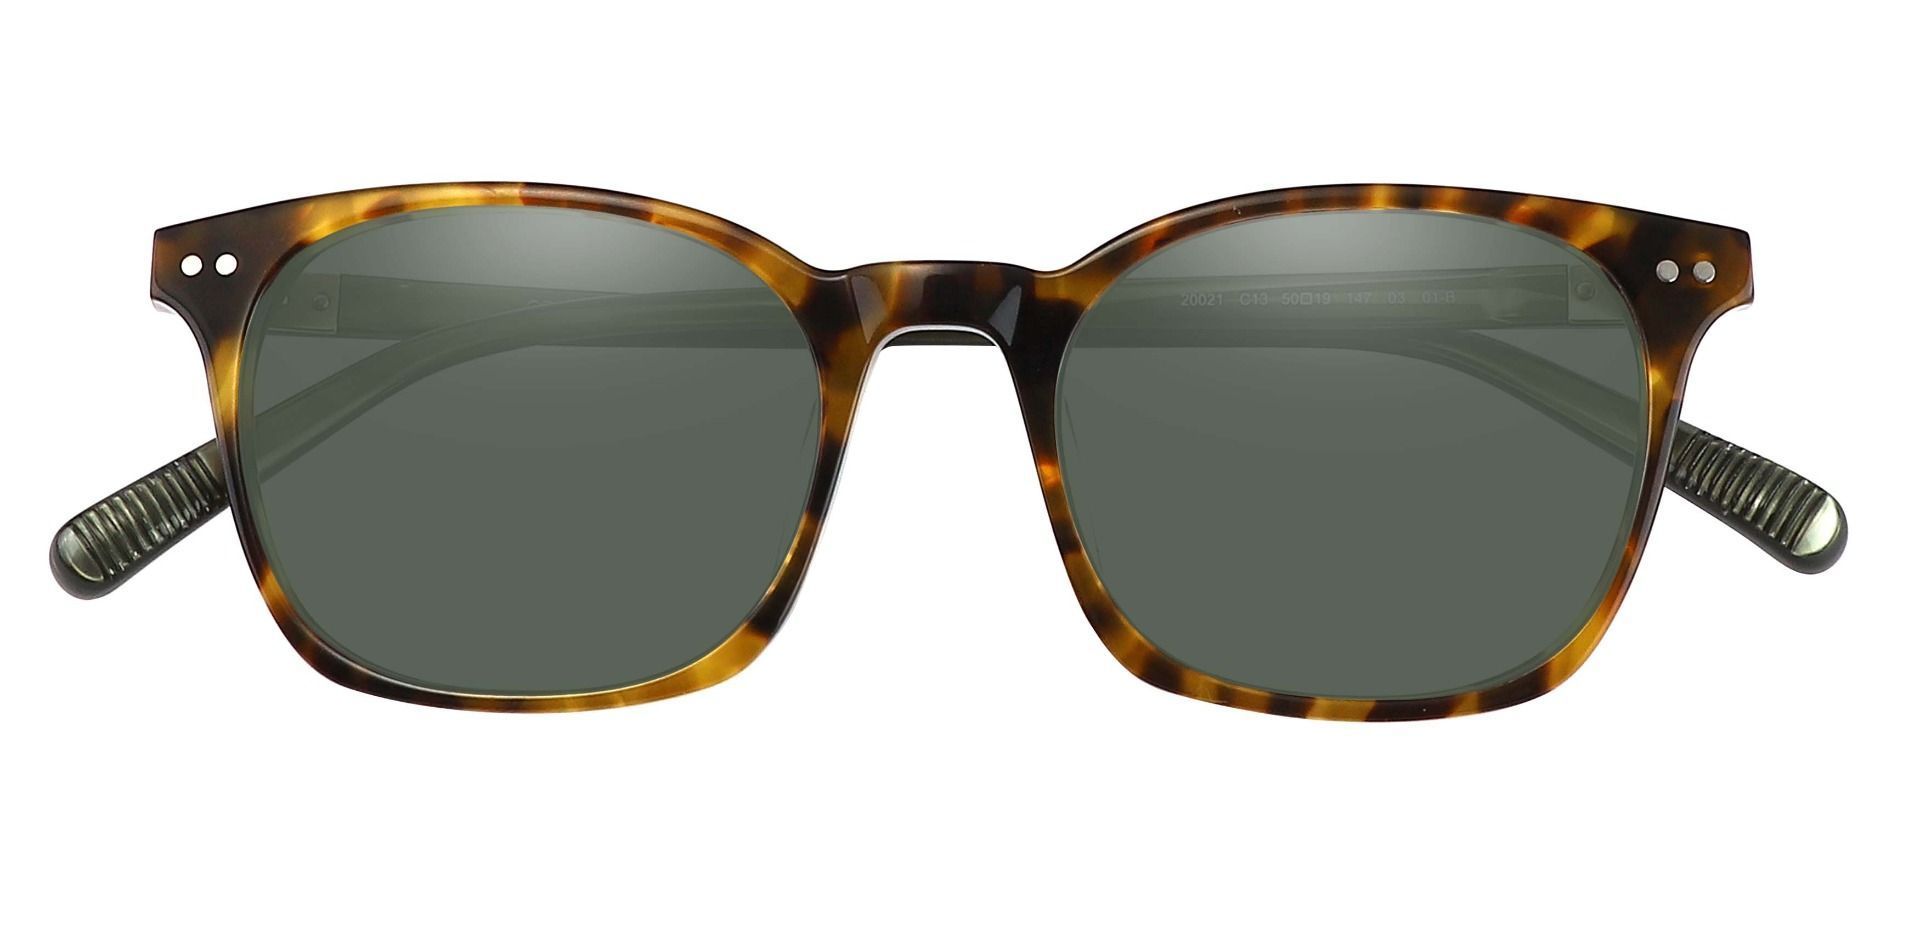 Alonzo Square Progressive Sunglasses - Tortoise Frame With Green Lenses